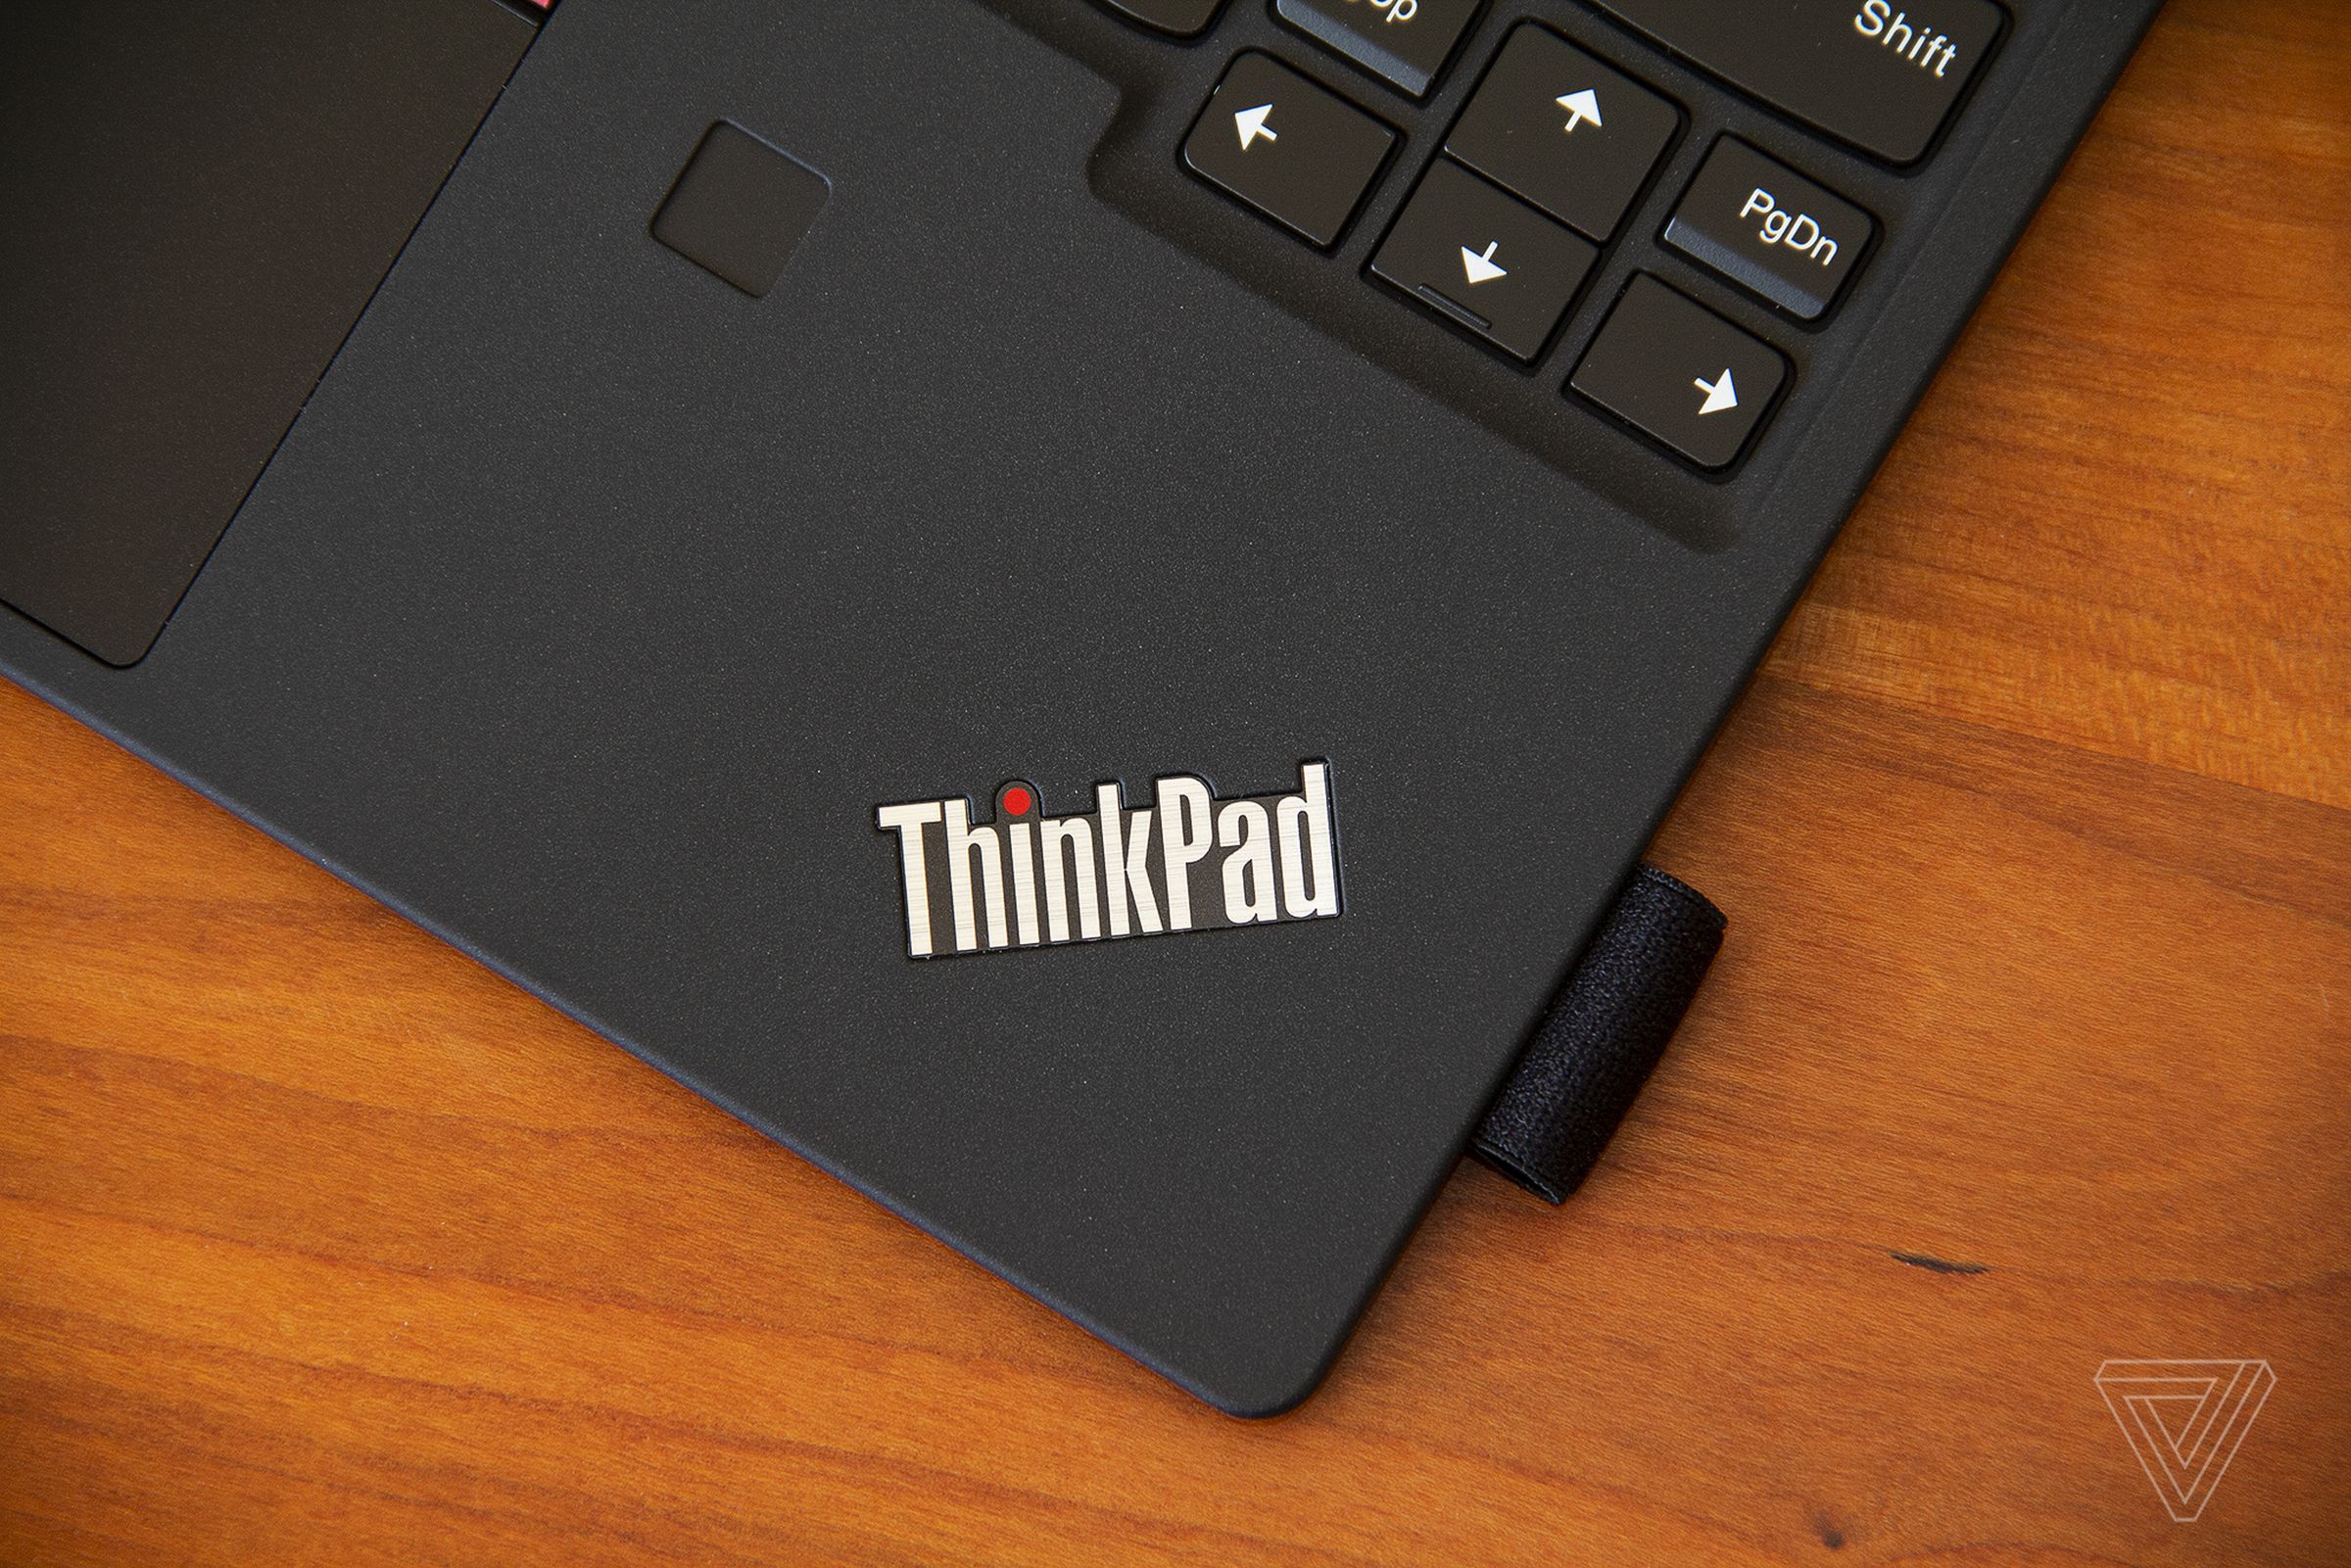 The ThinkPad logo on the bottom right corner of the ThinkPad X12 Detachable keyboard deck.